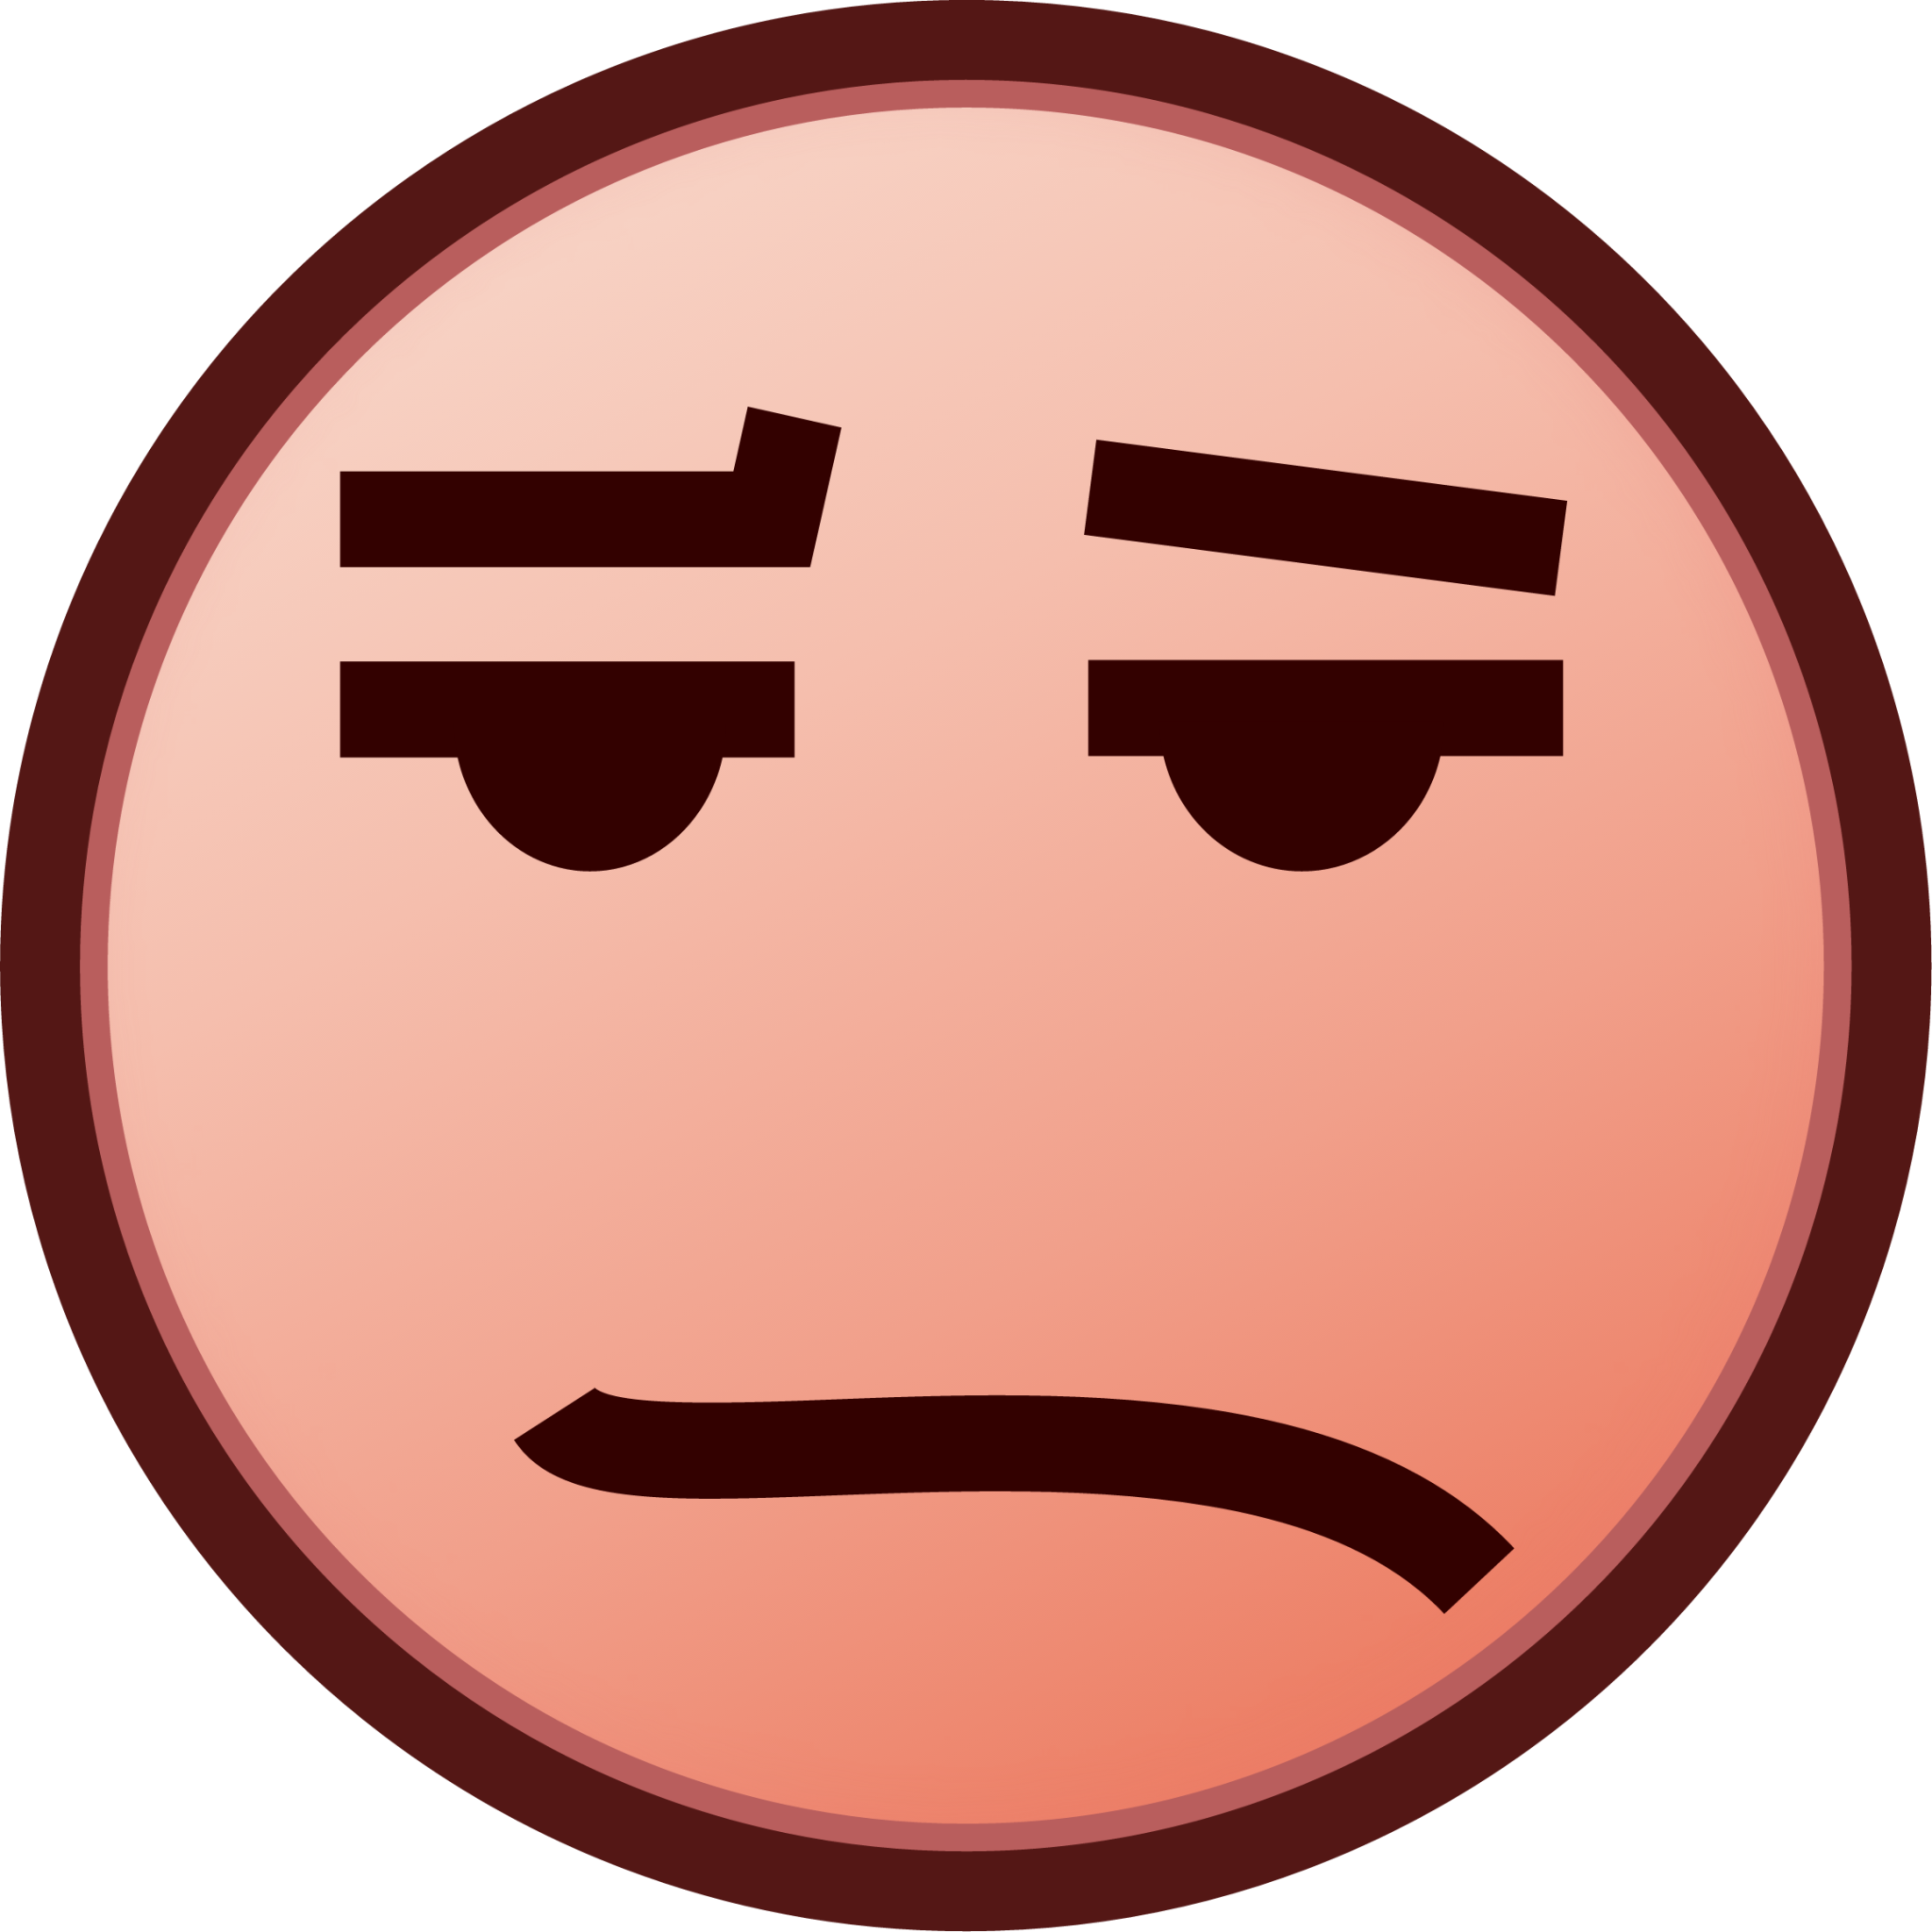 frowning face (plain) emoji